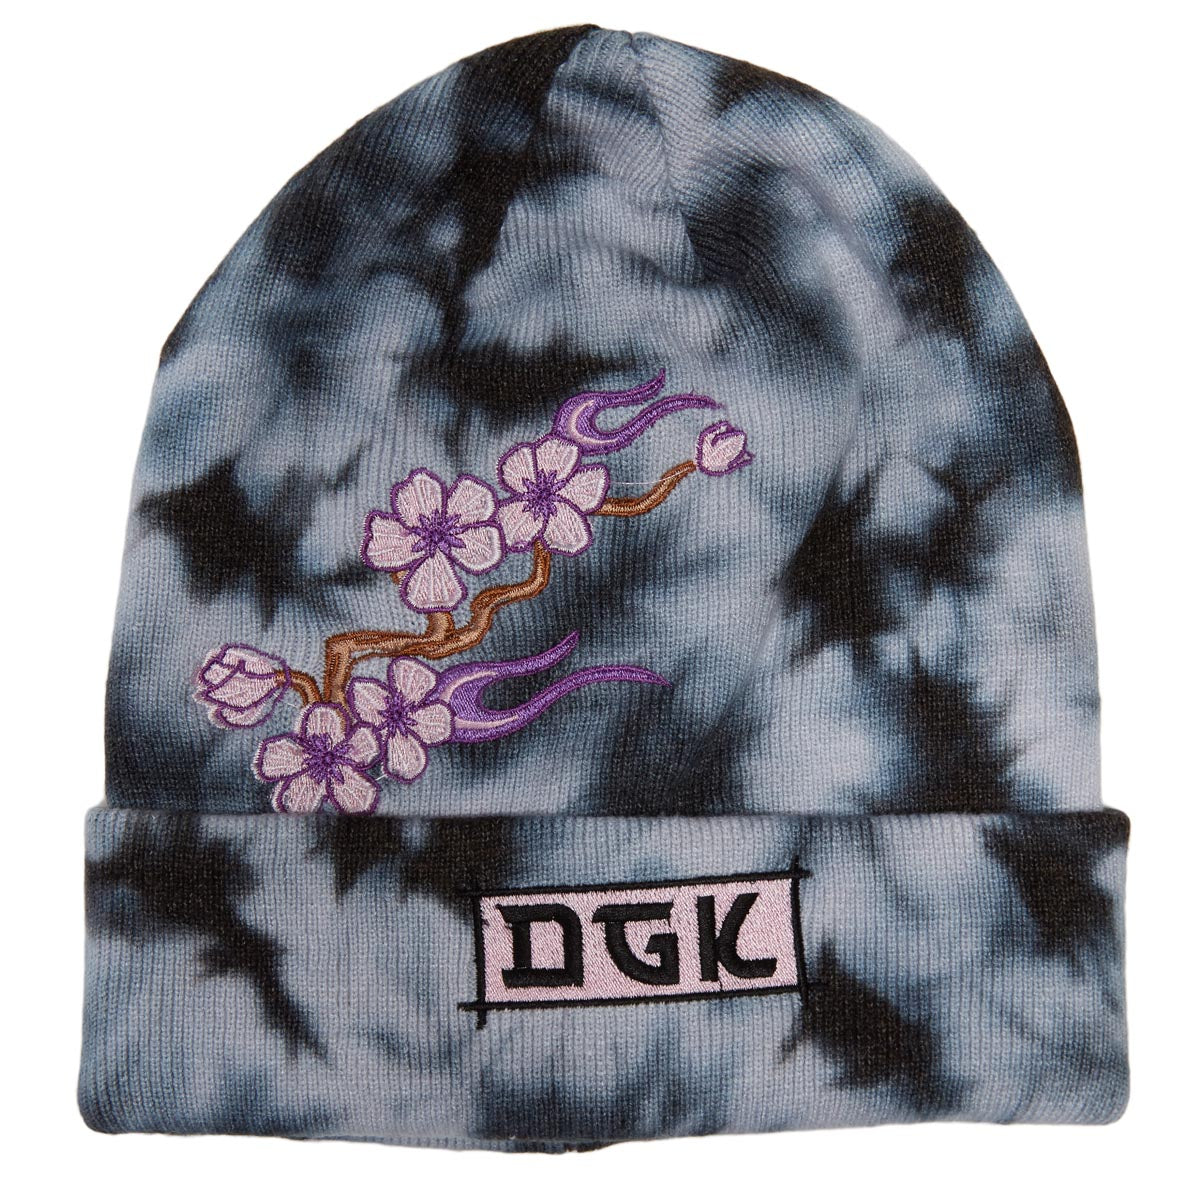 DGK Fire Blossom Beanie - Black Tie Dye image 1